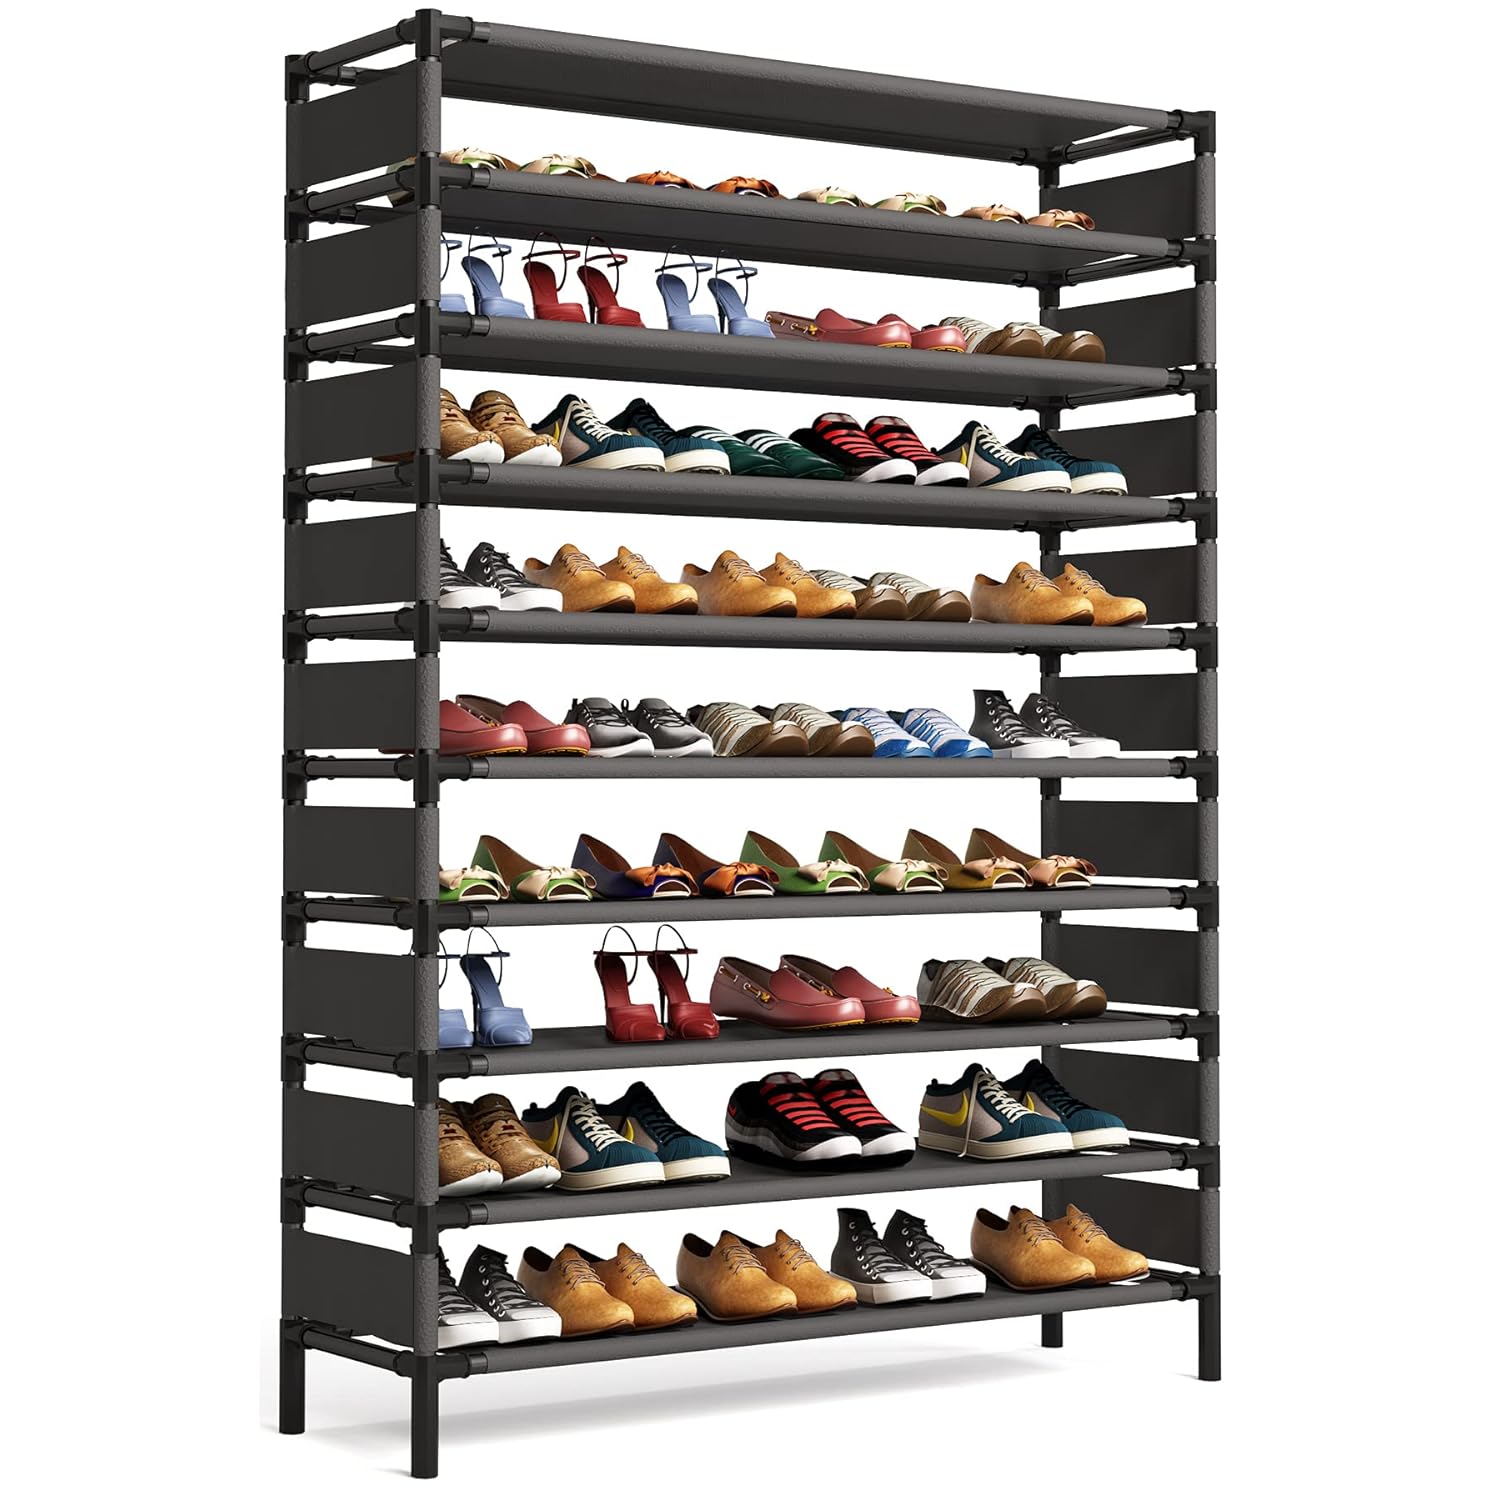 GCP Products 10 Tiers Shoe Rack, Large Capacity Shoe Organizer, Shoe Shelf for 50 Pair, Large Shoe Rack, Extra Large Shoe Shelf